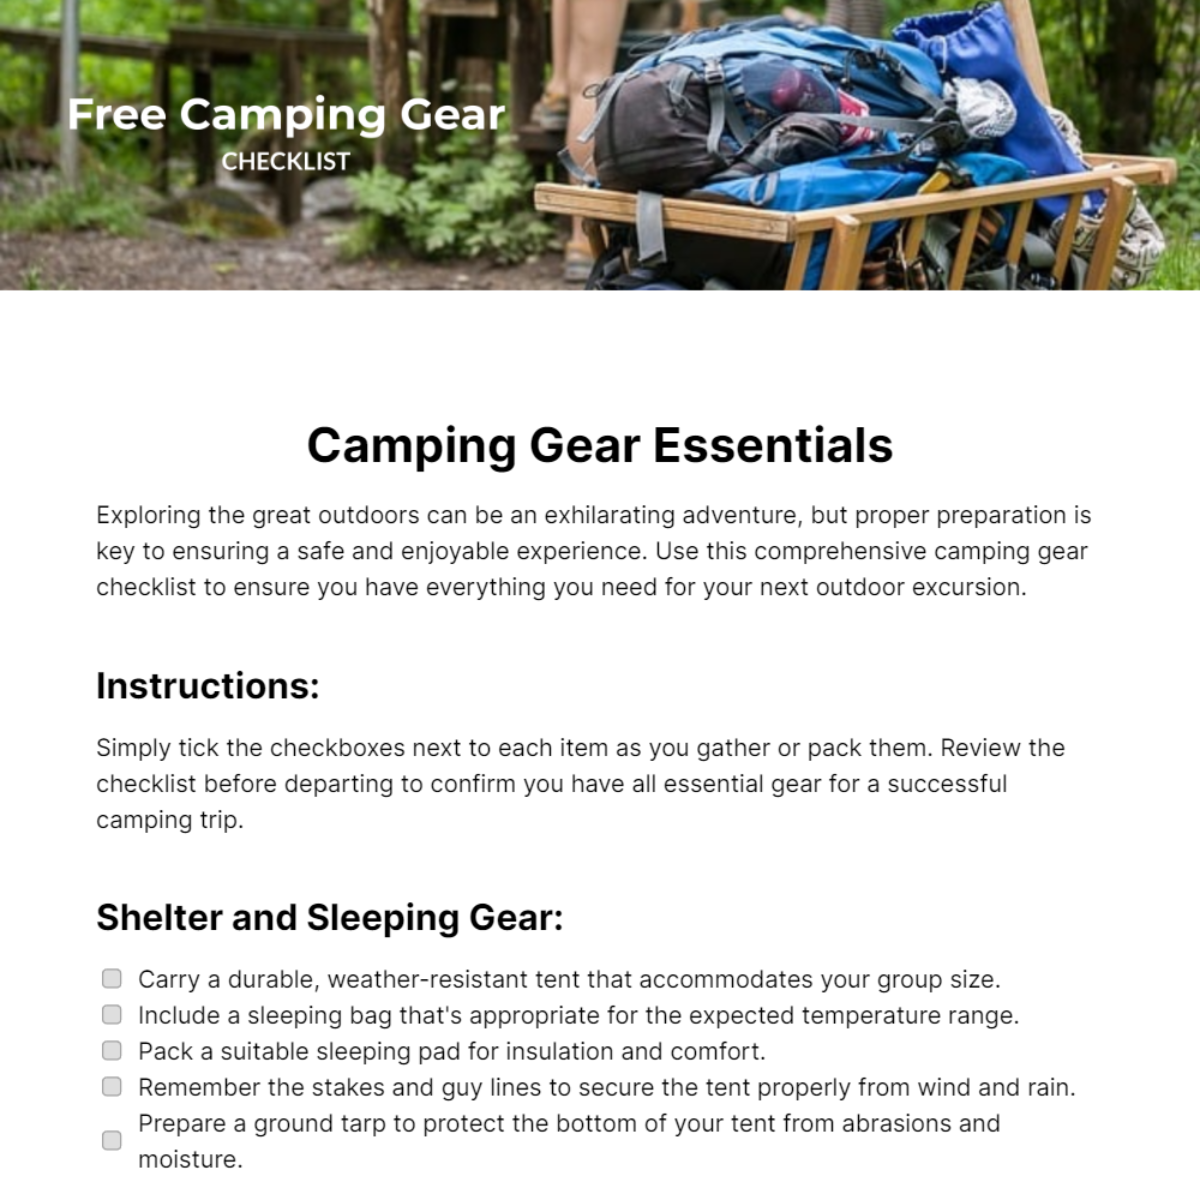 Camping Gear Checklist Template